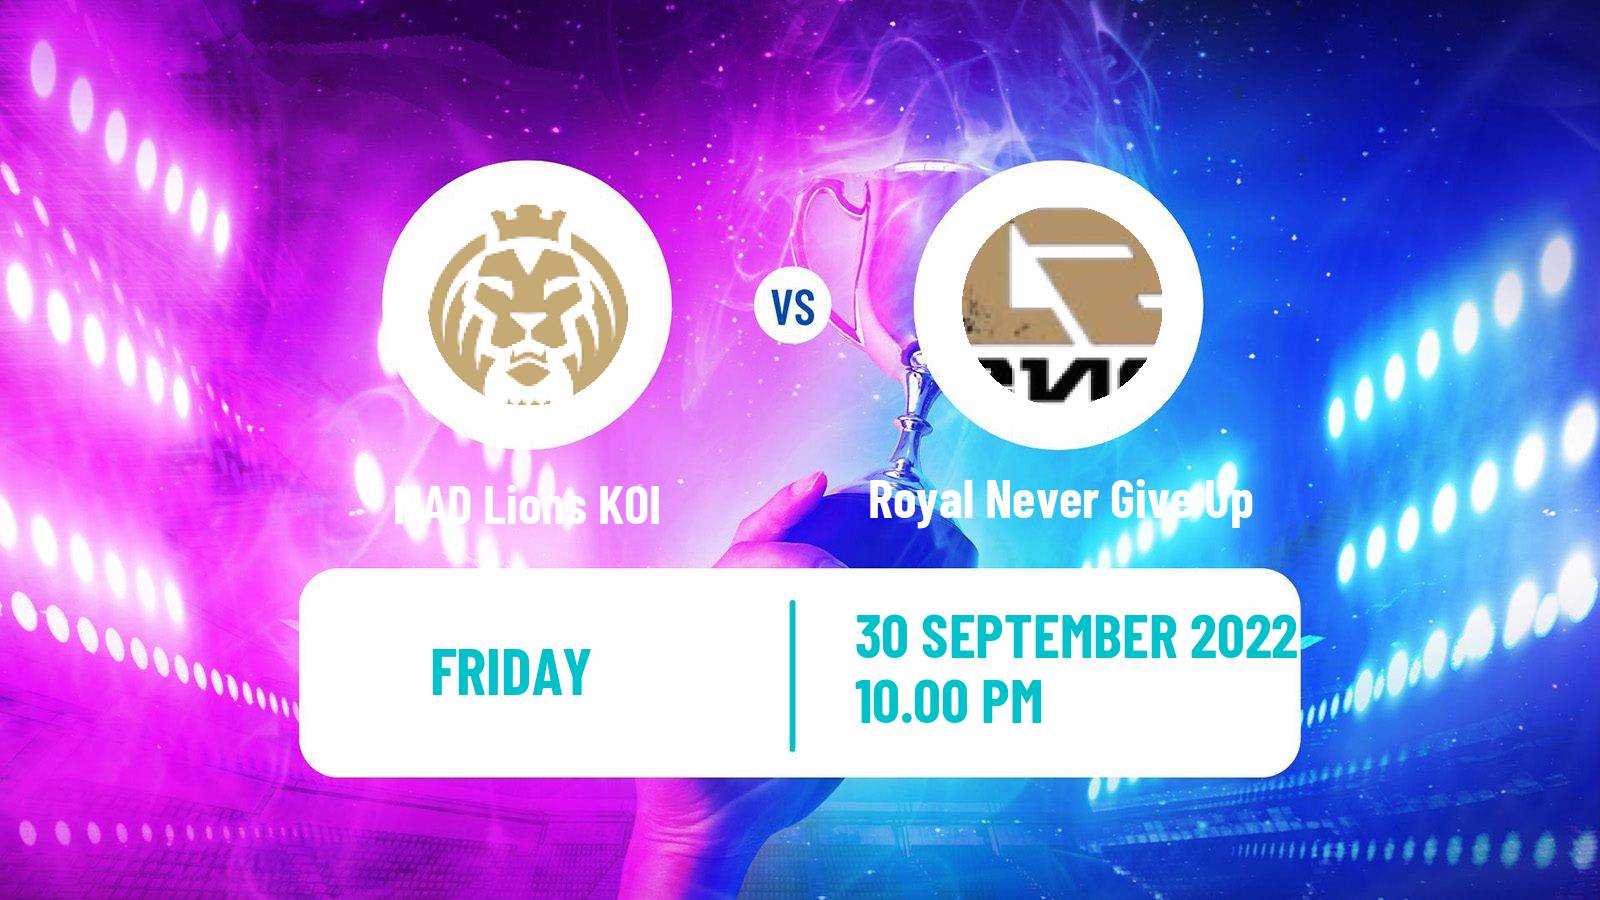 Esports eSports MAD Lions KOI - Royal Never Give Up